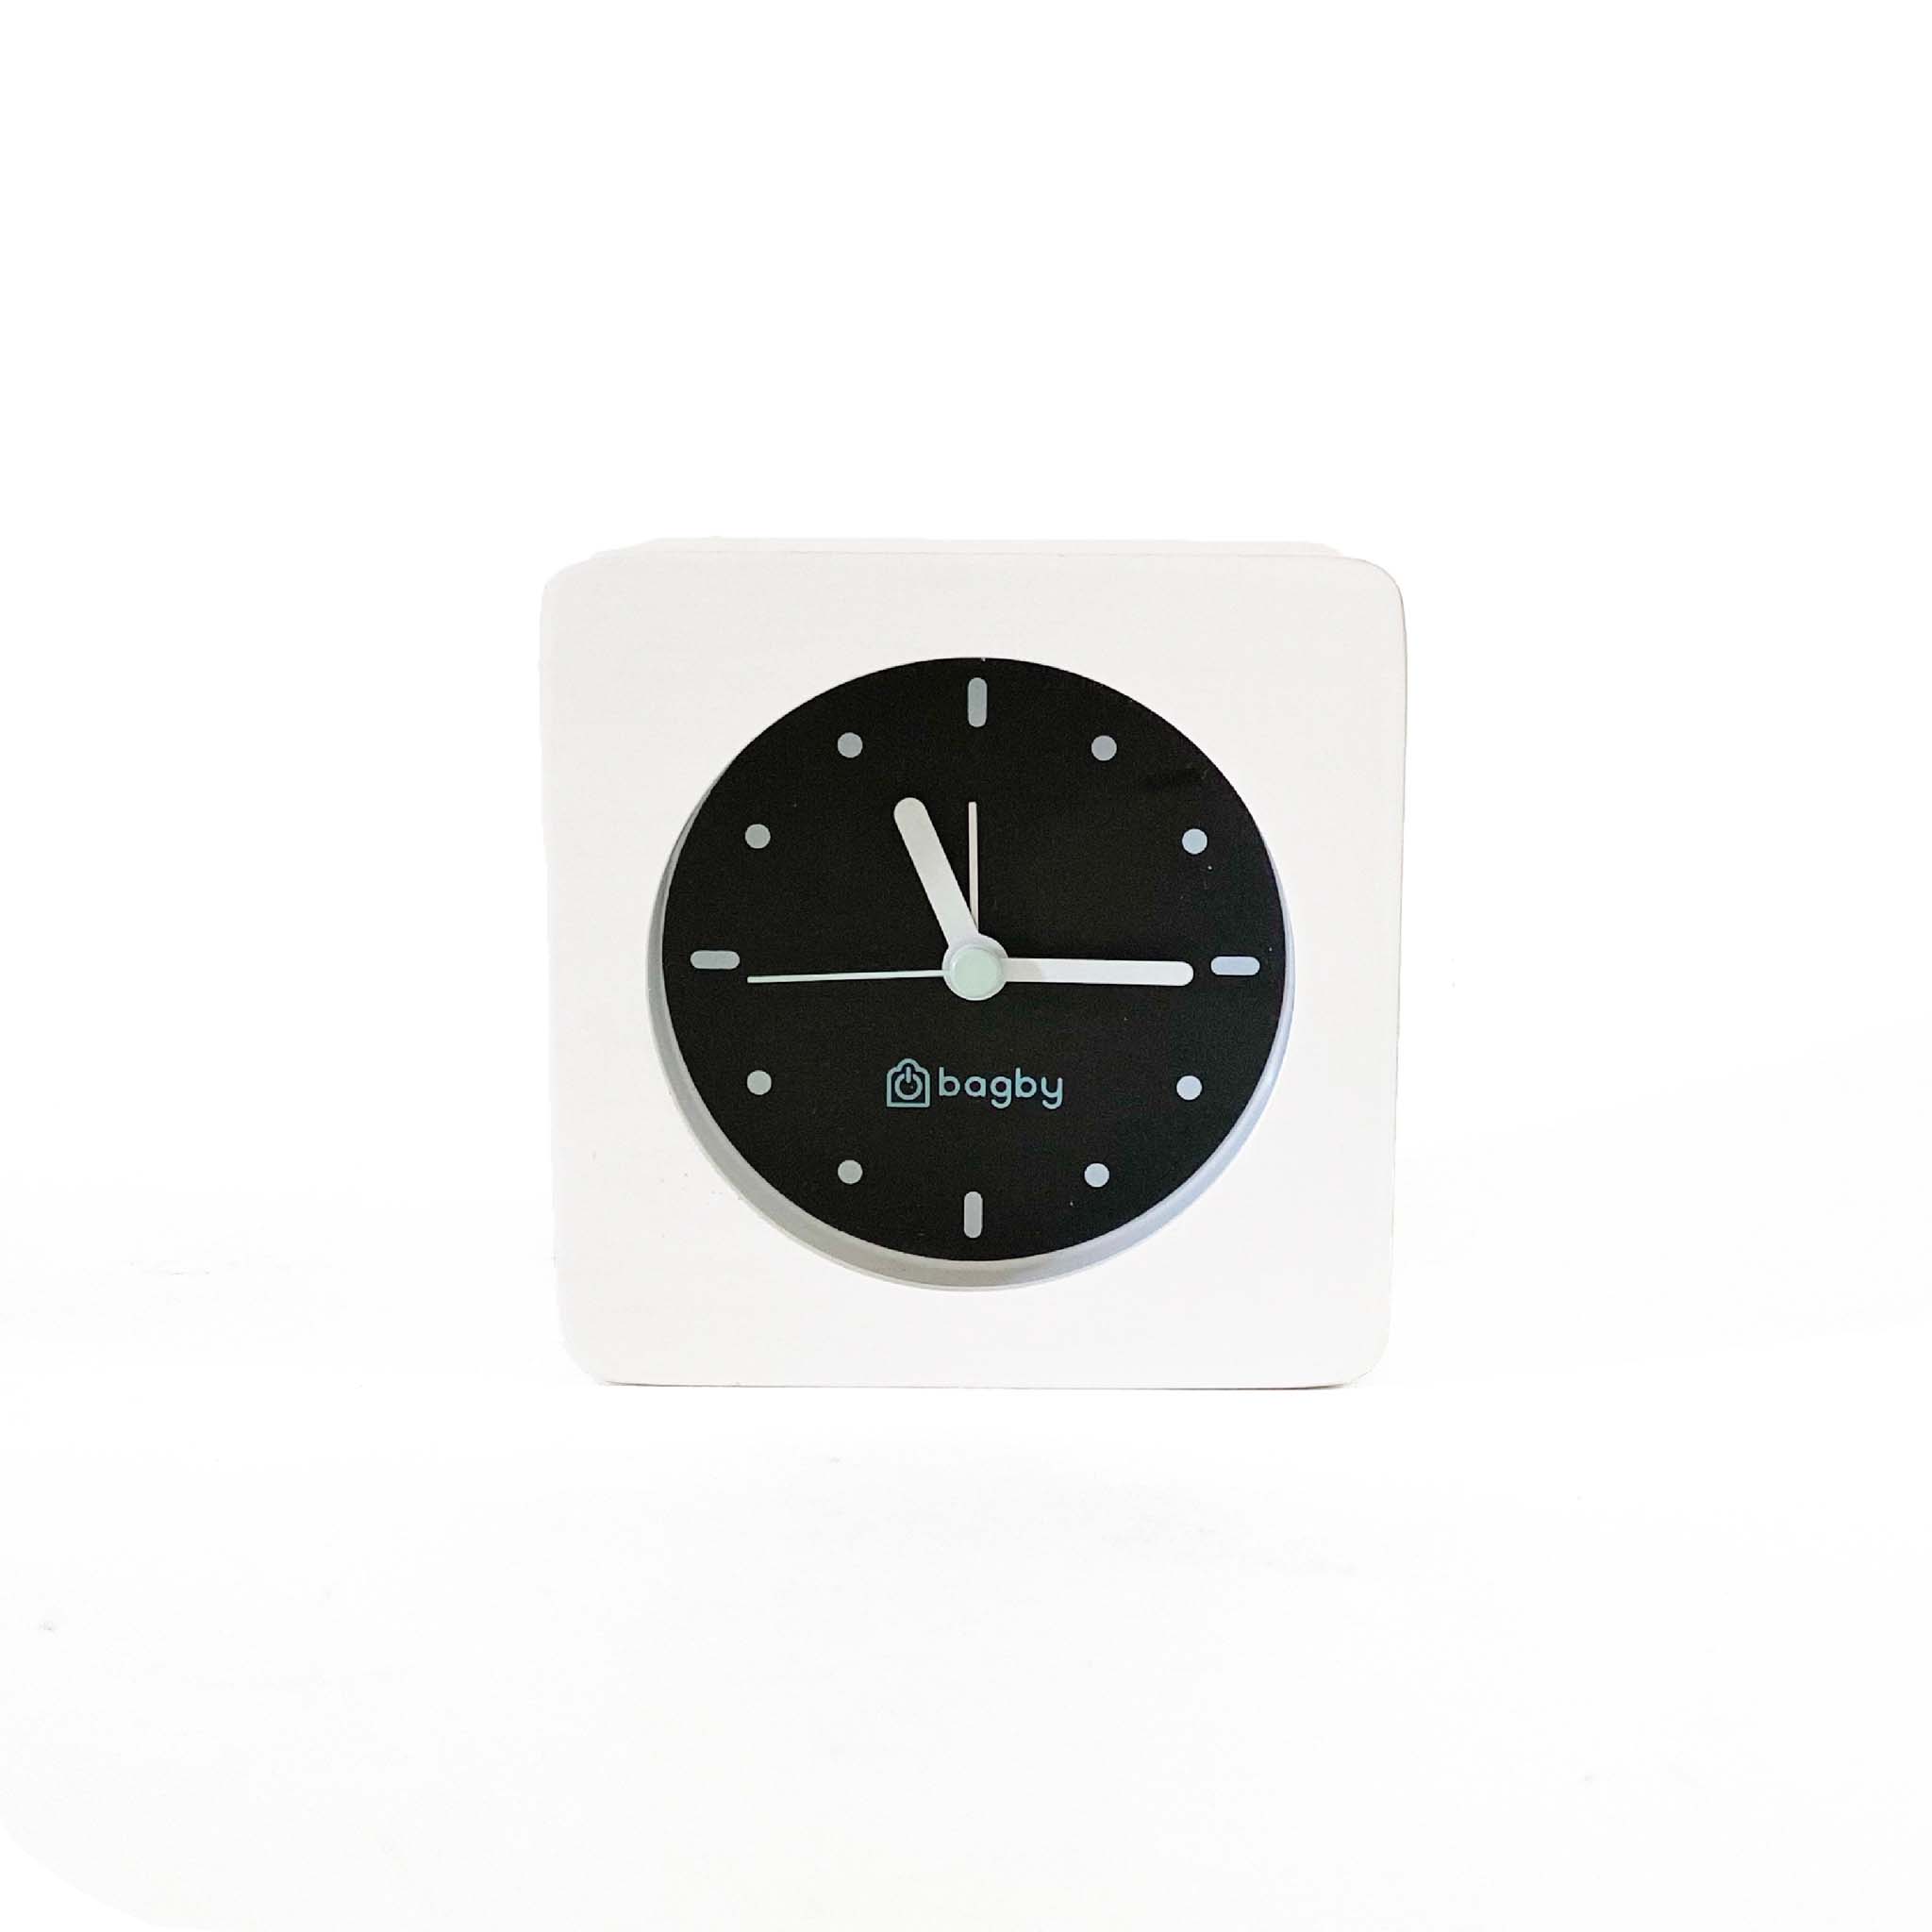 Best No EMF Analog Alarm Clock with No Blue And Light Radiation